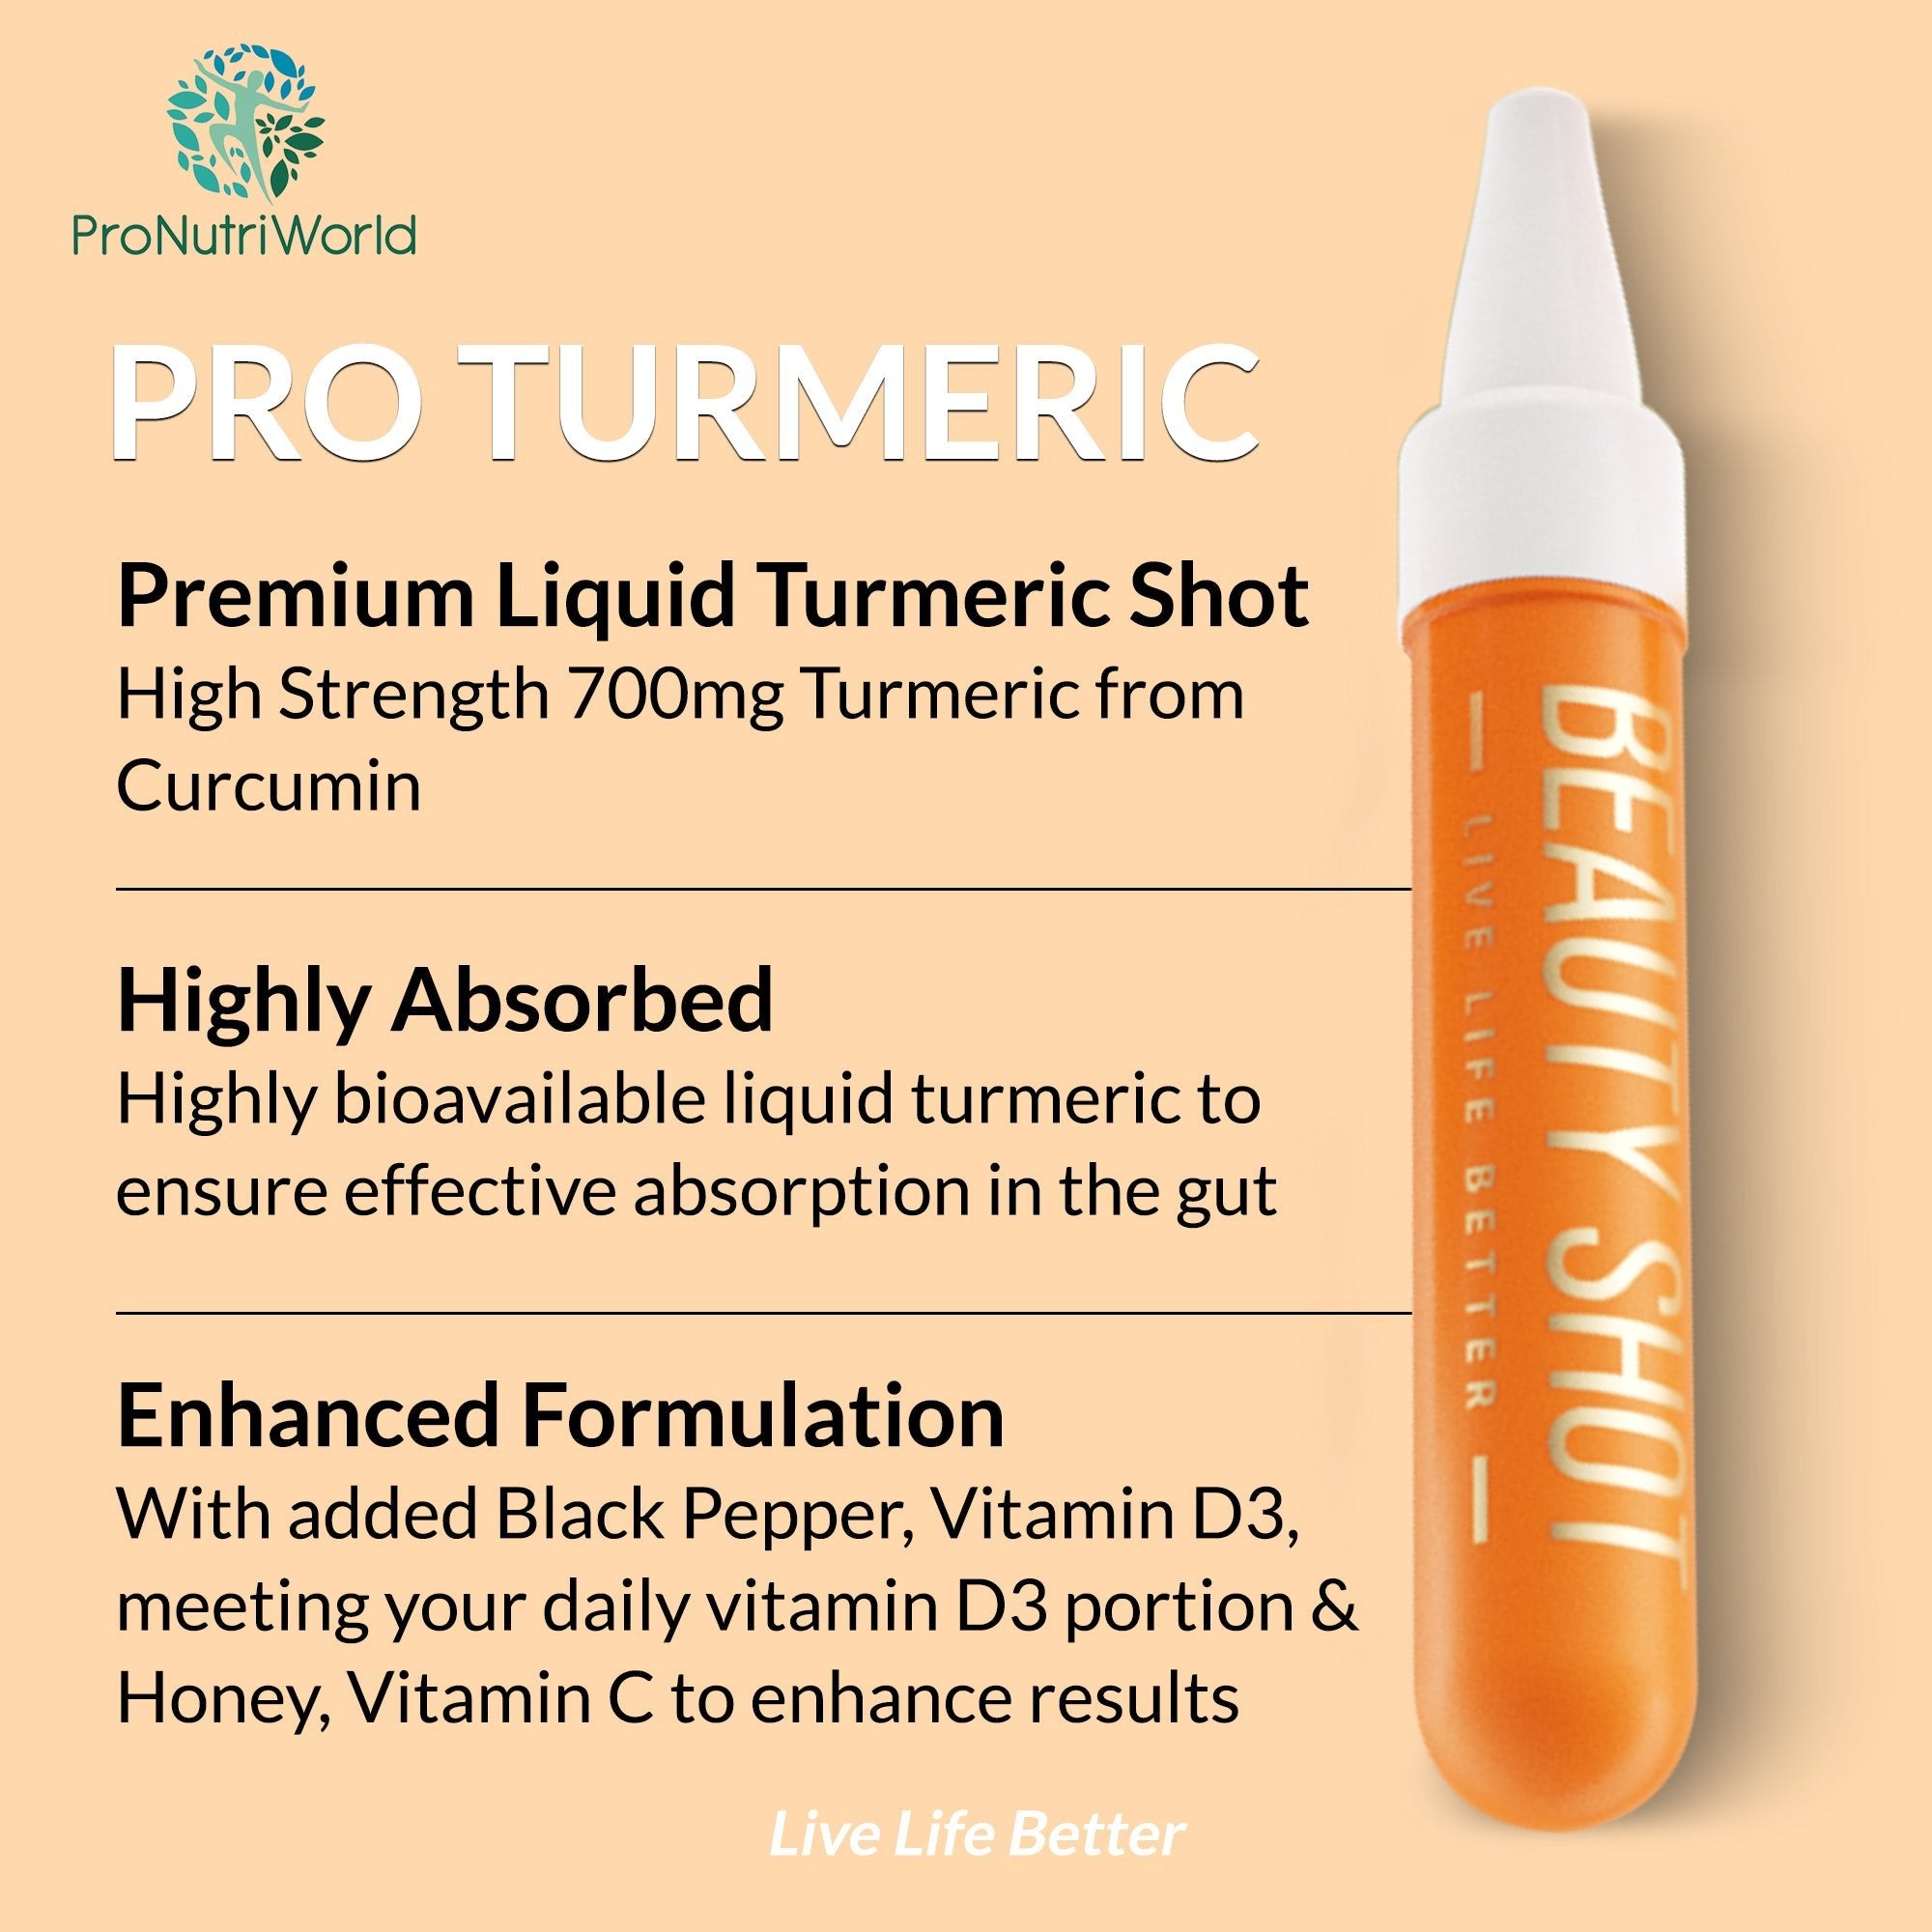 &lt;img src=&quot;pic.gif&quot; alt=&quot;Liquid Turmeric Drink Shots delicious tropical flavour anti-inflammatory pain free&quot; /&gt;